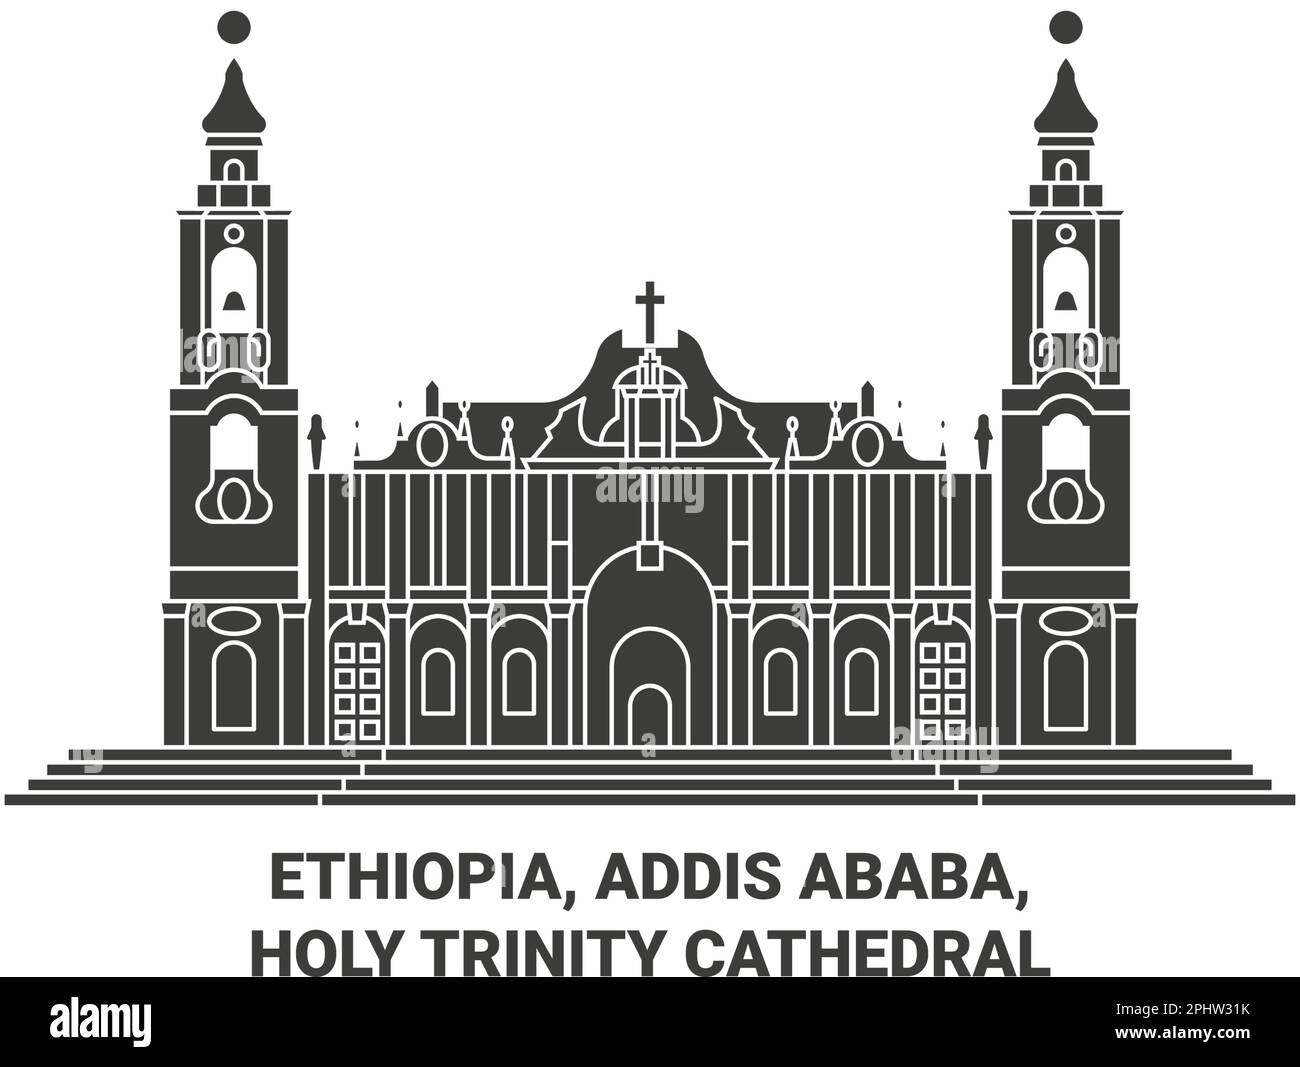 Ethiopia, Addis Ababa, Holy Trinity Cathedral travel landmark vector illustration Stock Vector